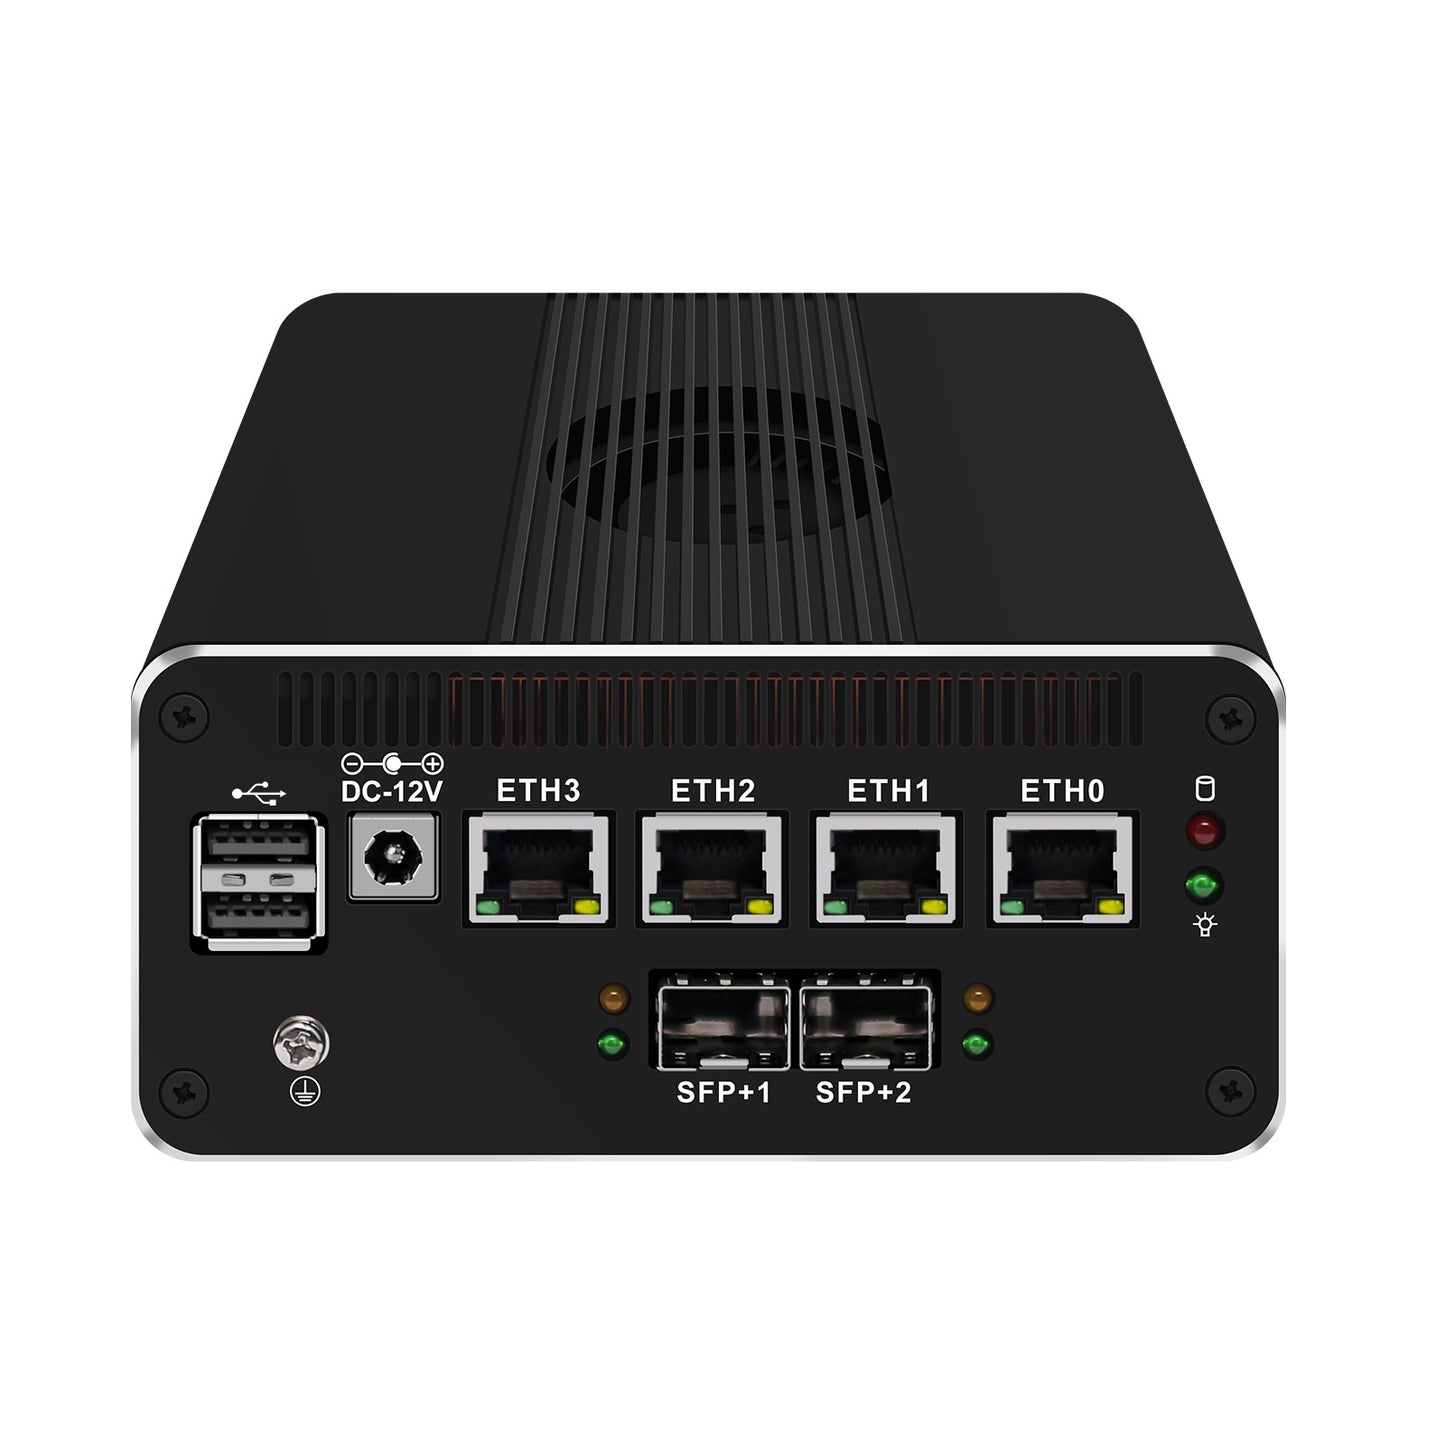 MOGINSOK 10Gbe Pfsense Router Micro Firewall Appliance, 10GbE Mini PC with SFP+ Intel Alder Lake N100/N200/N305 4xIntel I226-V 2.5GbE 2*Intel 82599ES 10GbE Firewall LTE Router Support AES-NI DDR5 RAM NVMe SSD